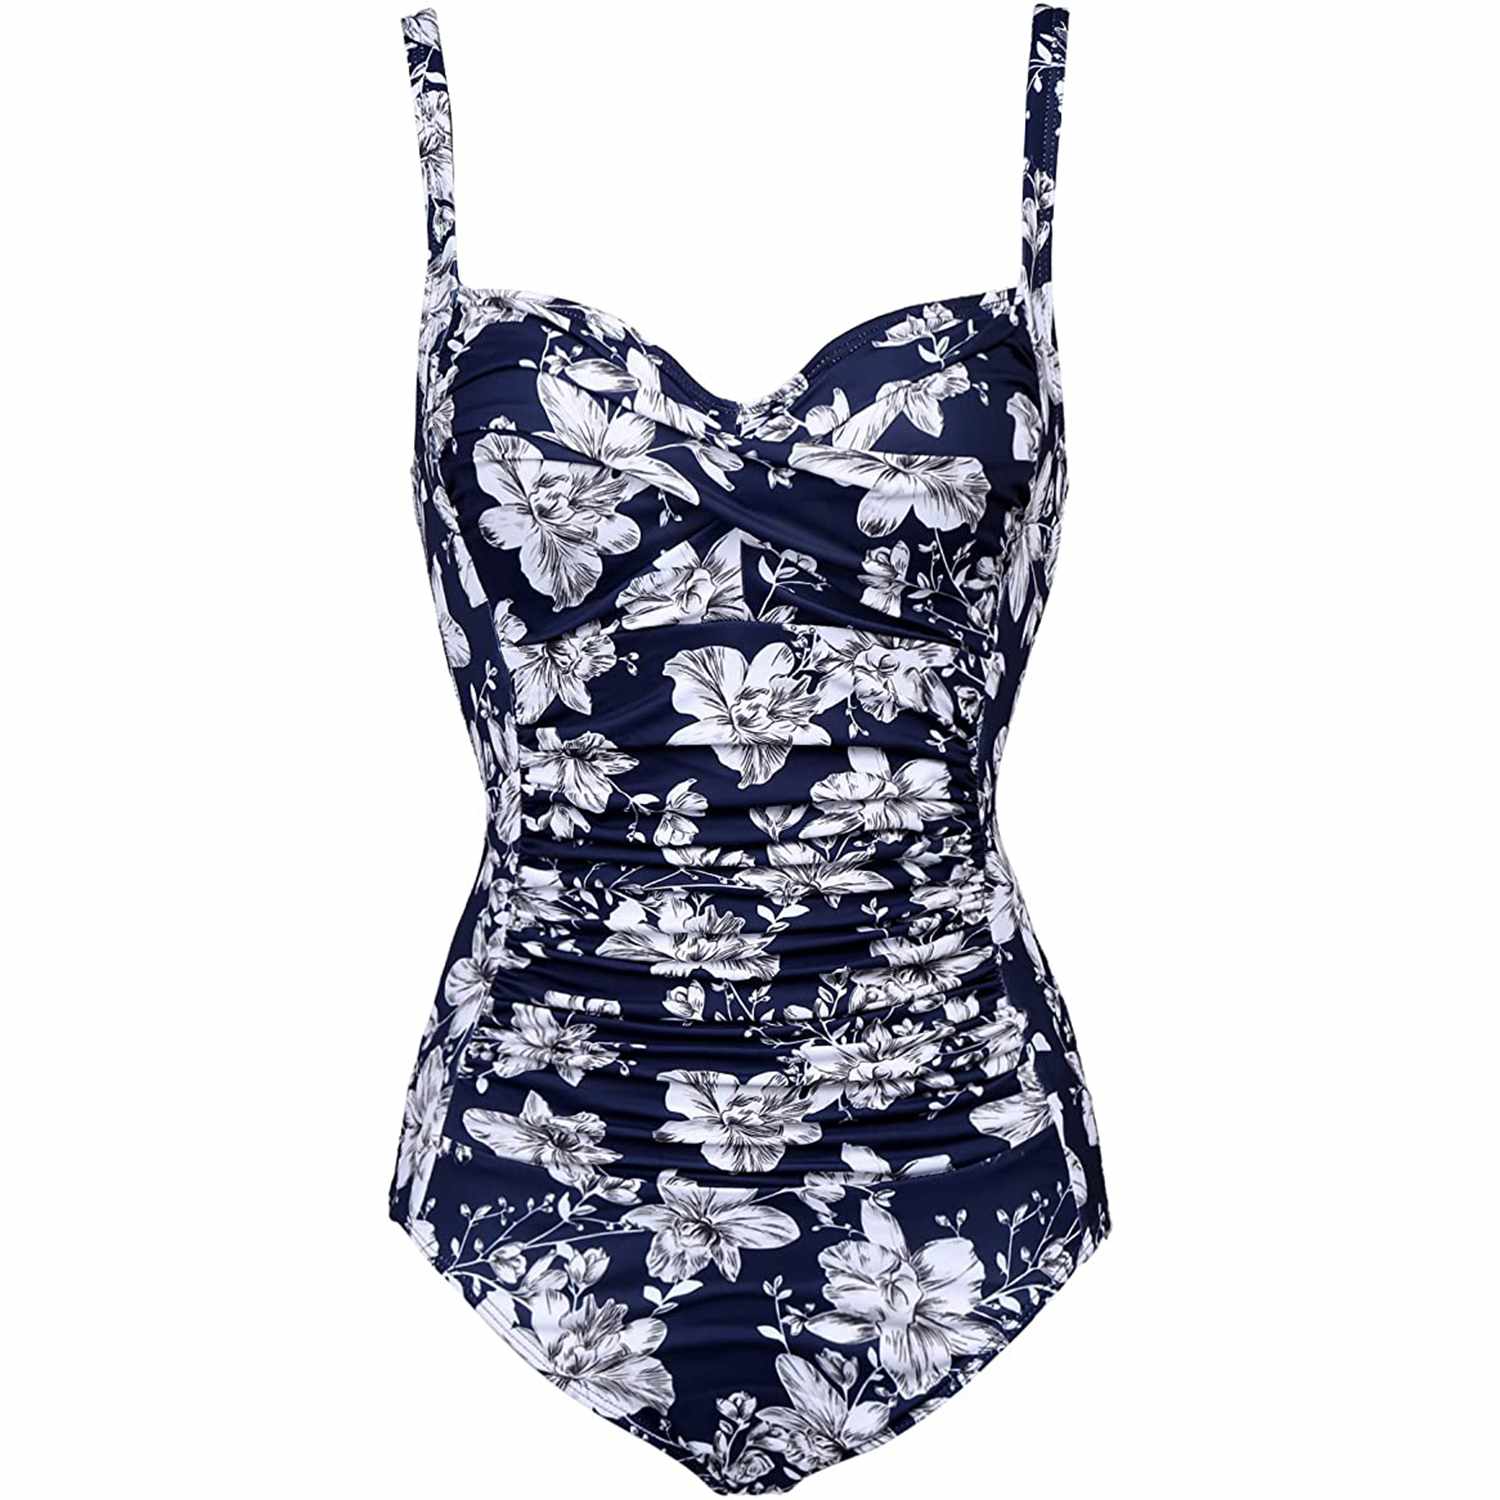 The Ekouaer One-Piece Swimsuit Is Popular on Amazon | PEOPLE.com